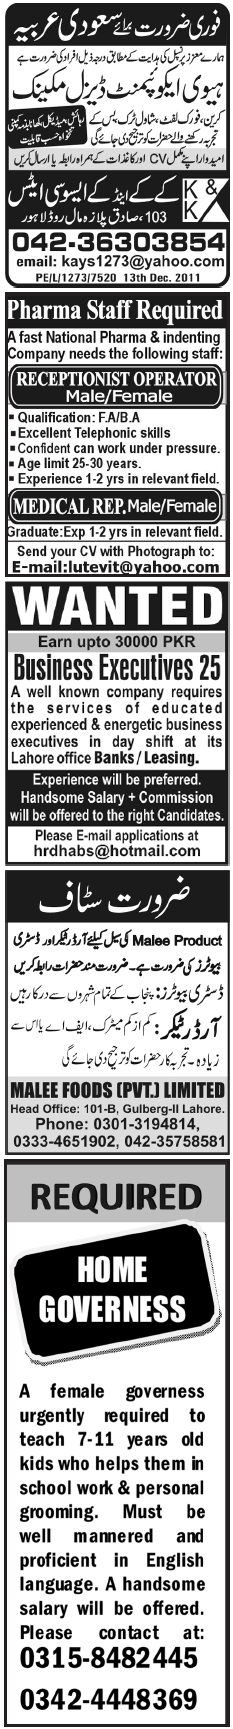 Misc. Jobs in Karachi Jang Classified 7